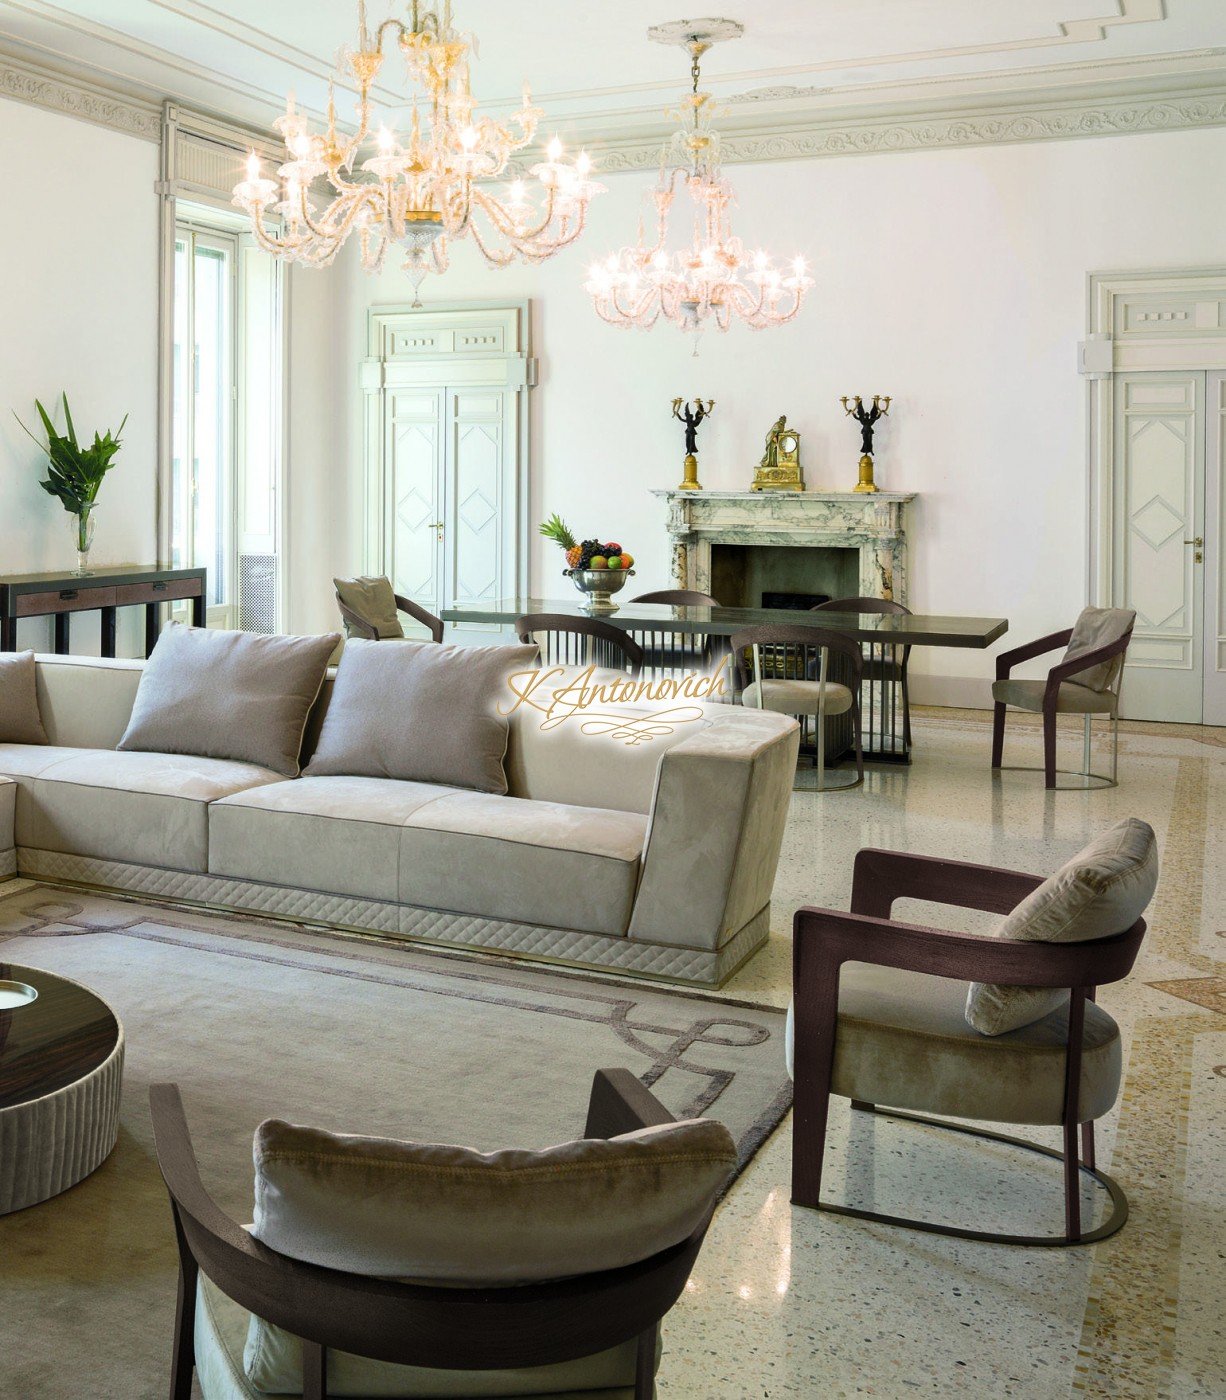 Creatice Italian Furniture Living Room with Simple Decor